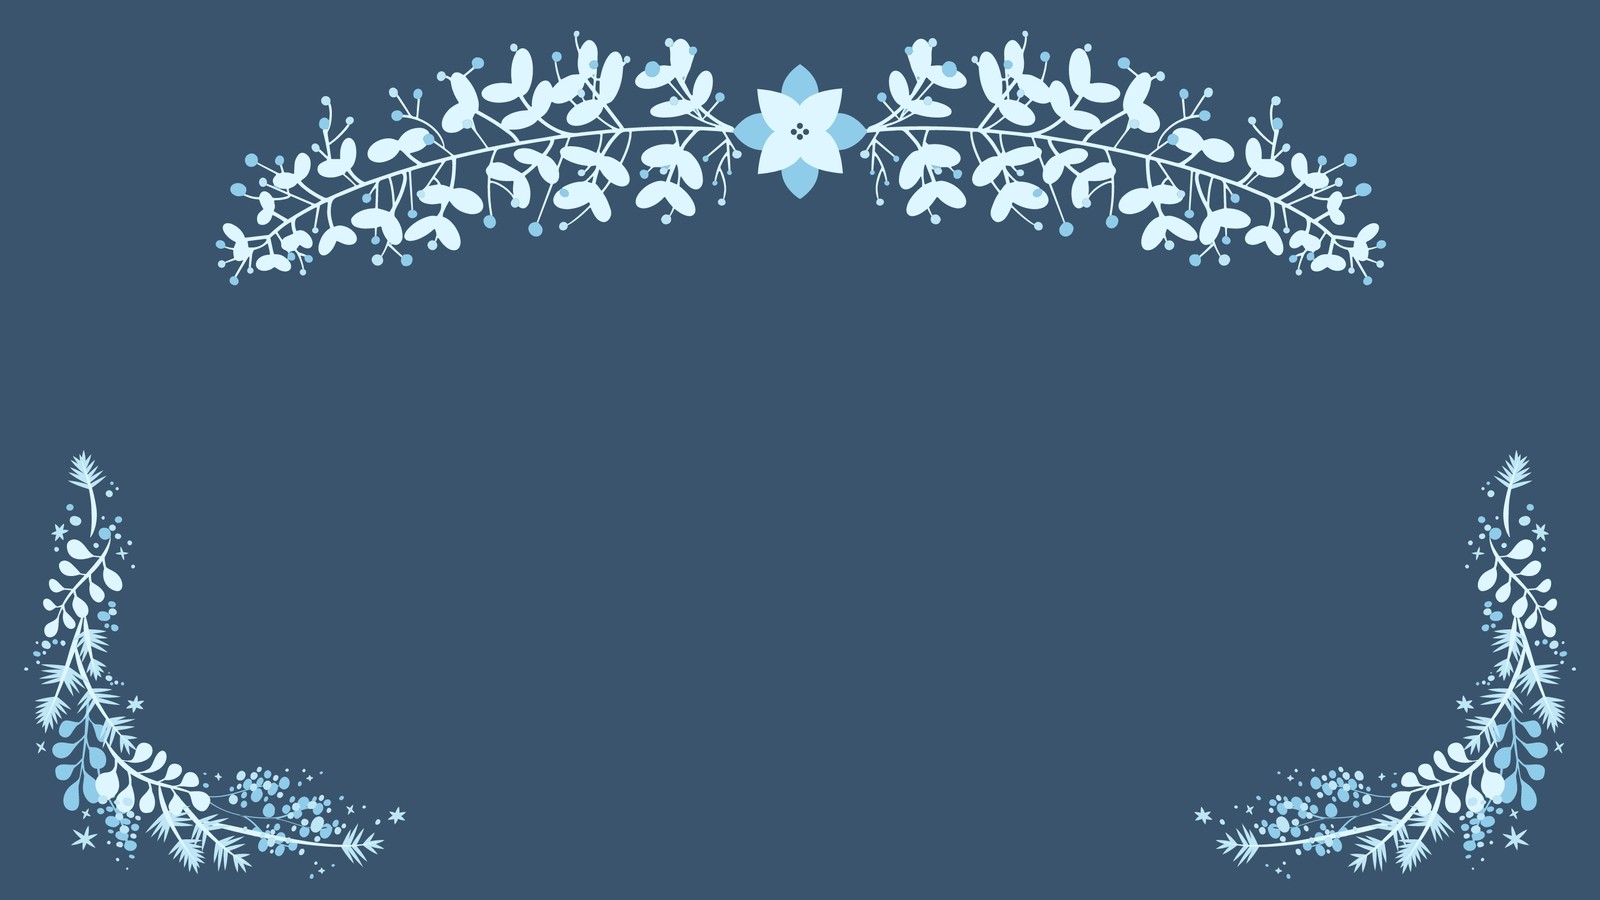 Customize 366+ Christmas Desktop Wallpaper Templates Online - Canva